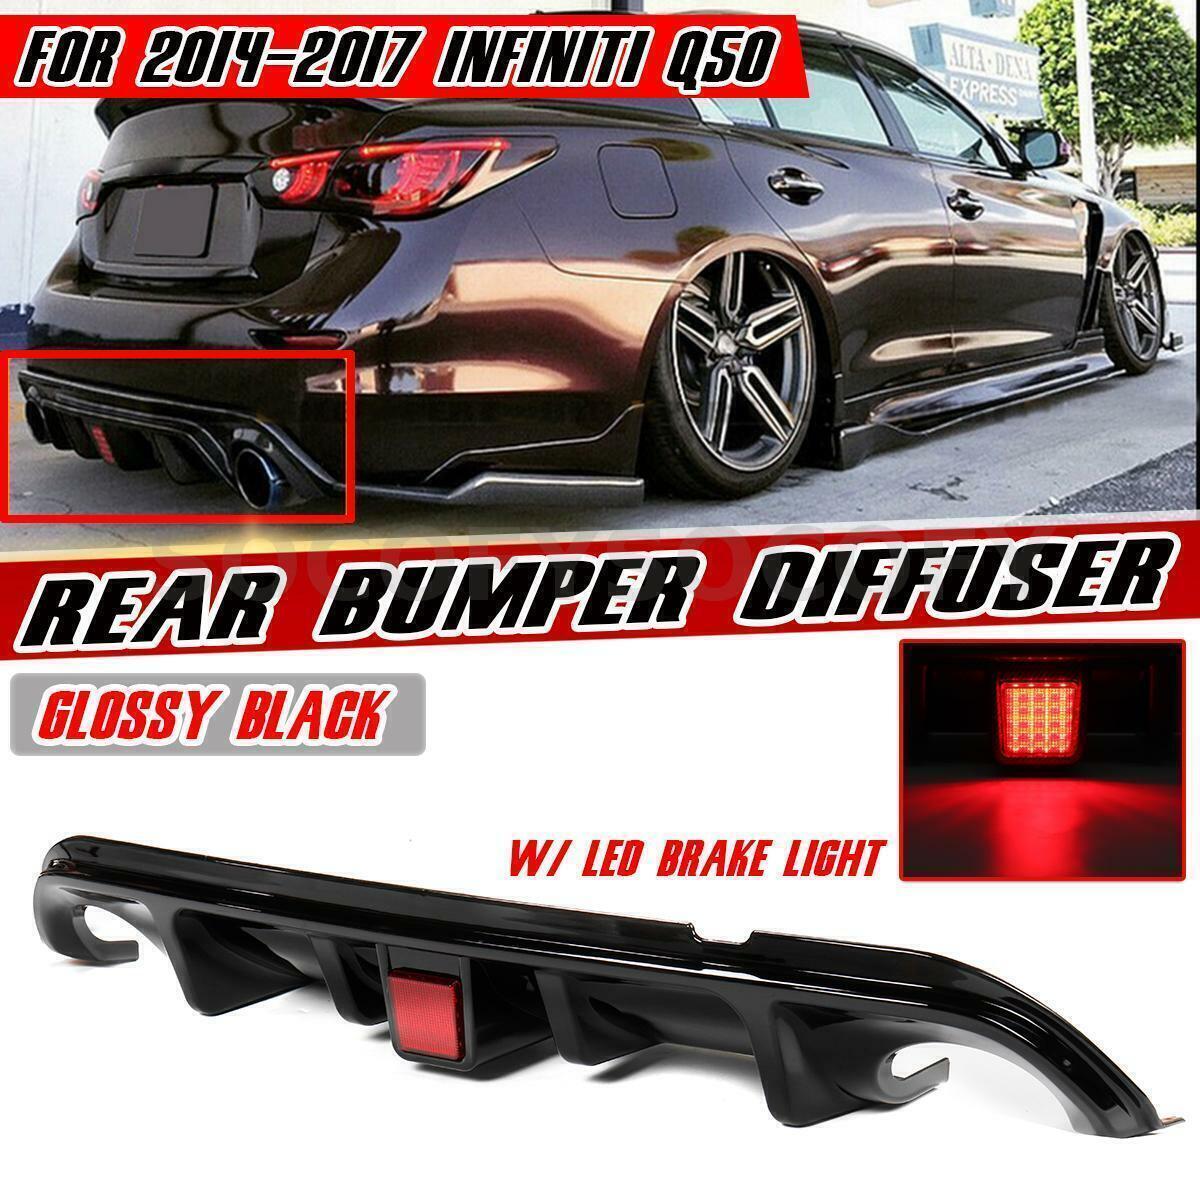 Black Rear Bumper Diffuser Spoiler Lip For 2014-2017 Infiniti Q50 W/ LED Light